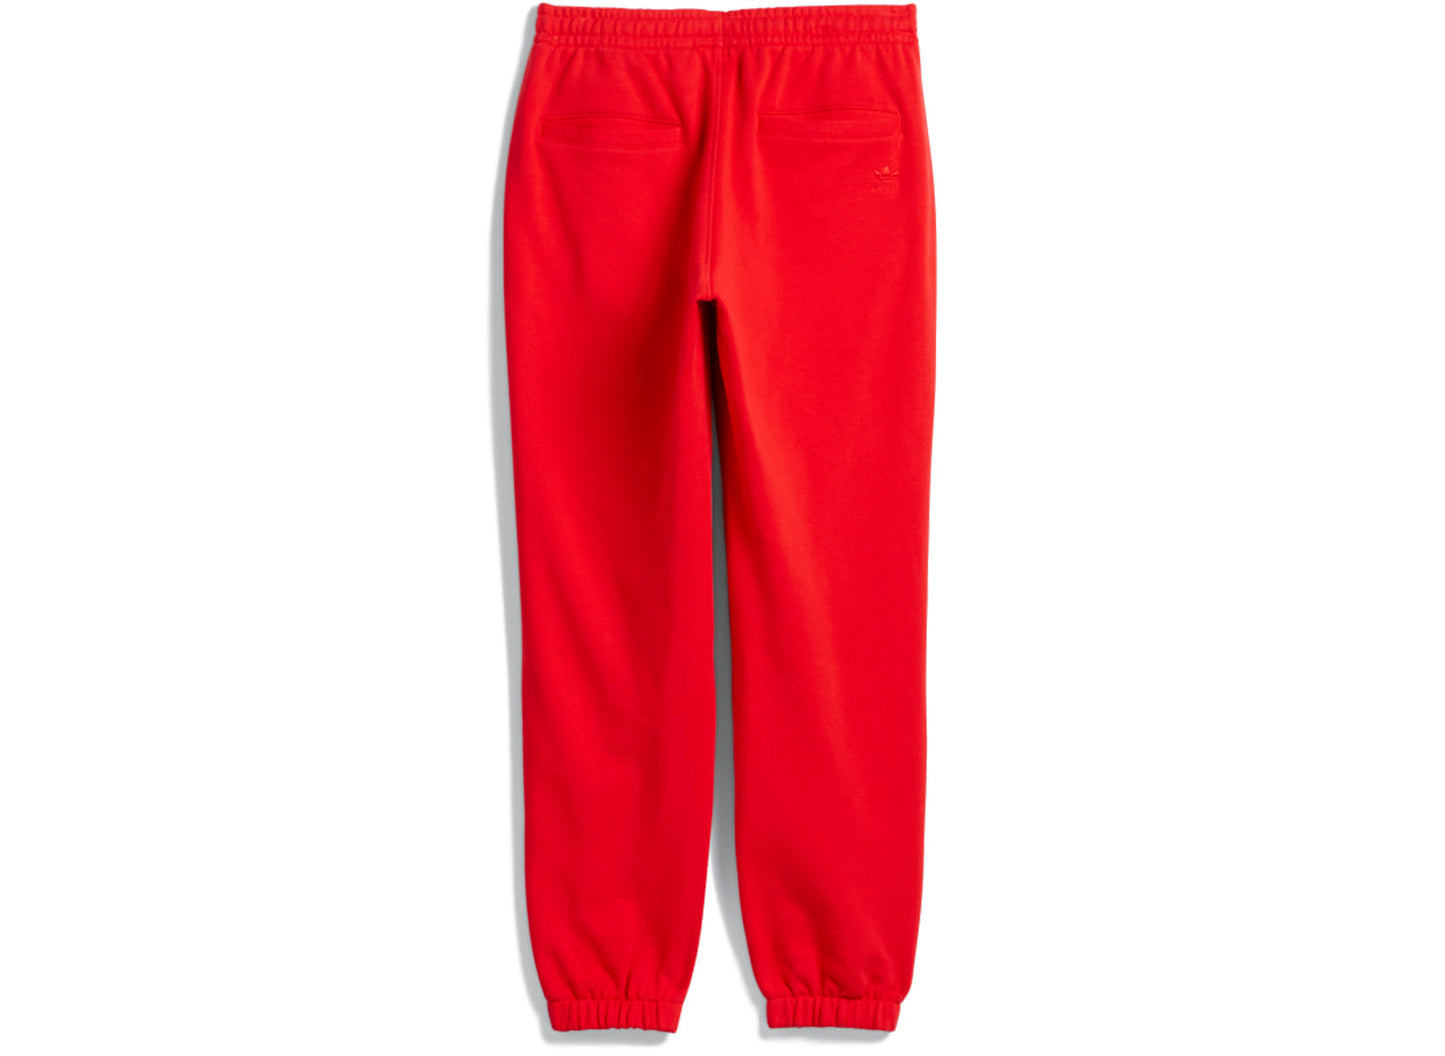 Adidas Pharrell Williams Basics Pants in Vivid Red